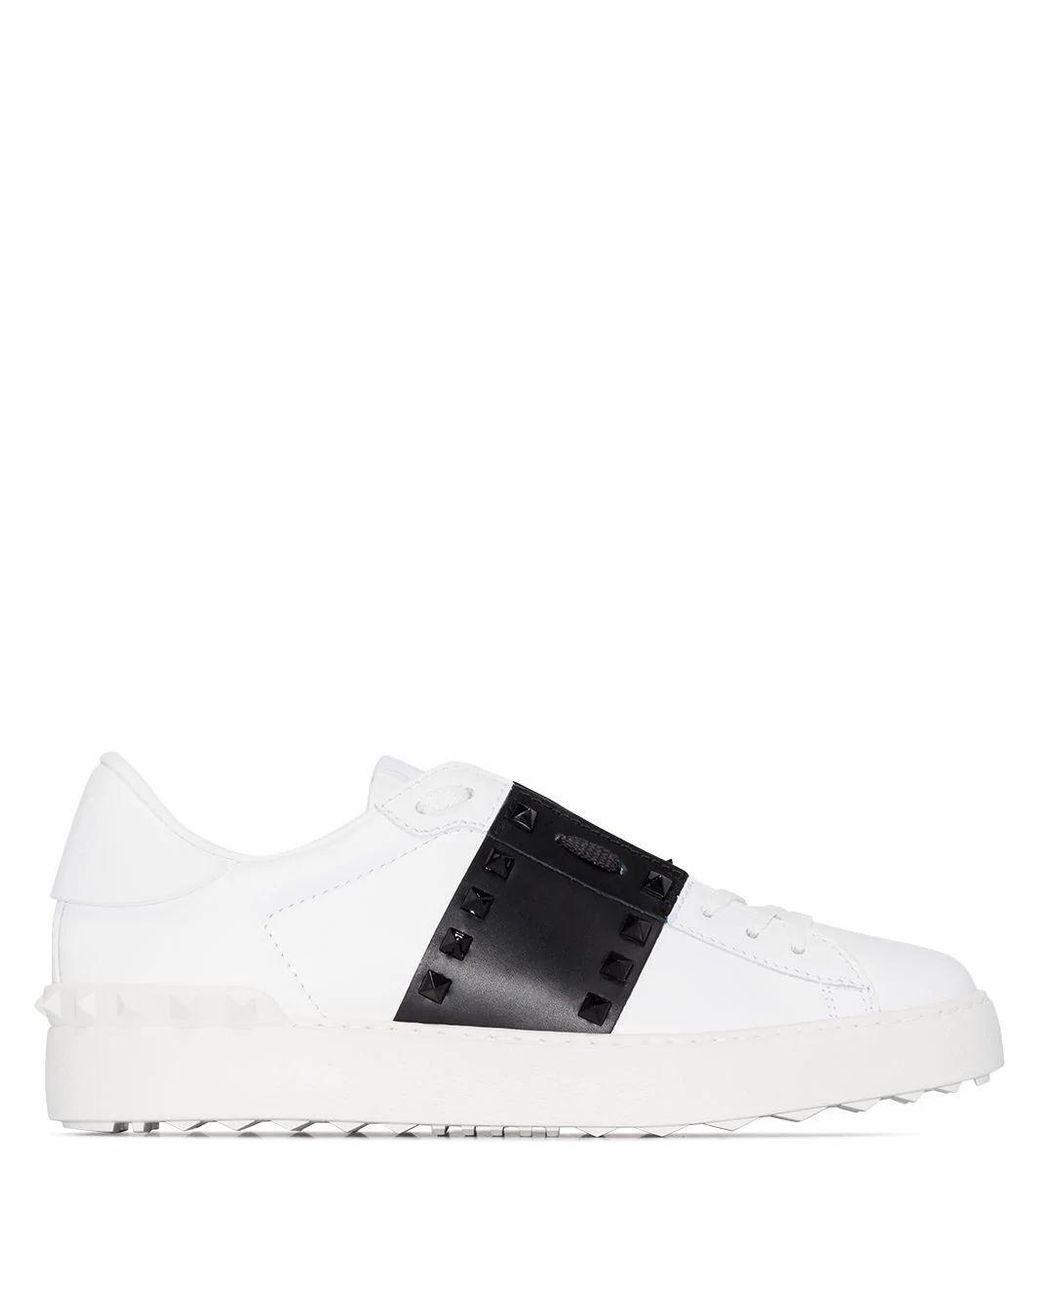 Valentino Garavani Leather Sneakers in White - Lyst